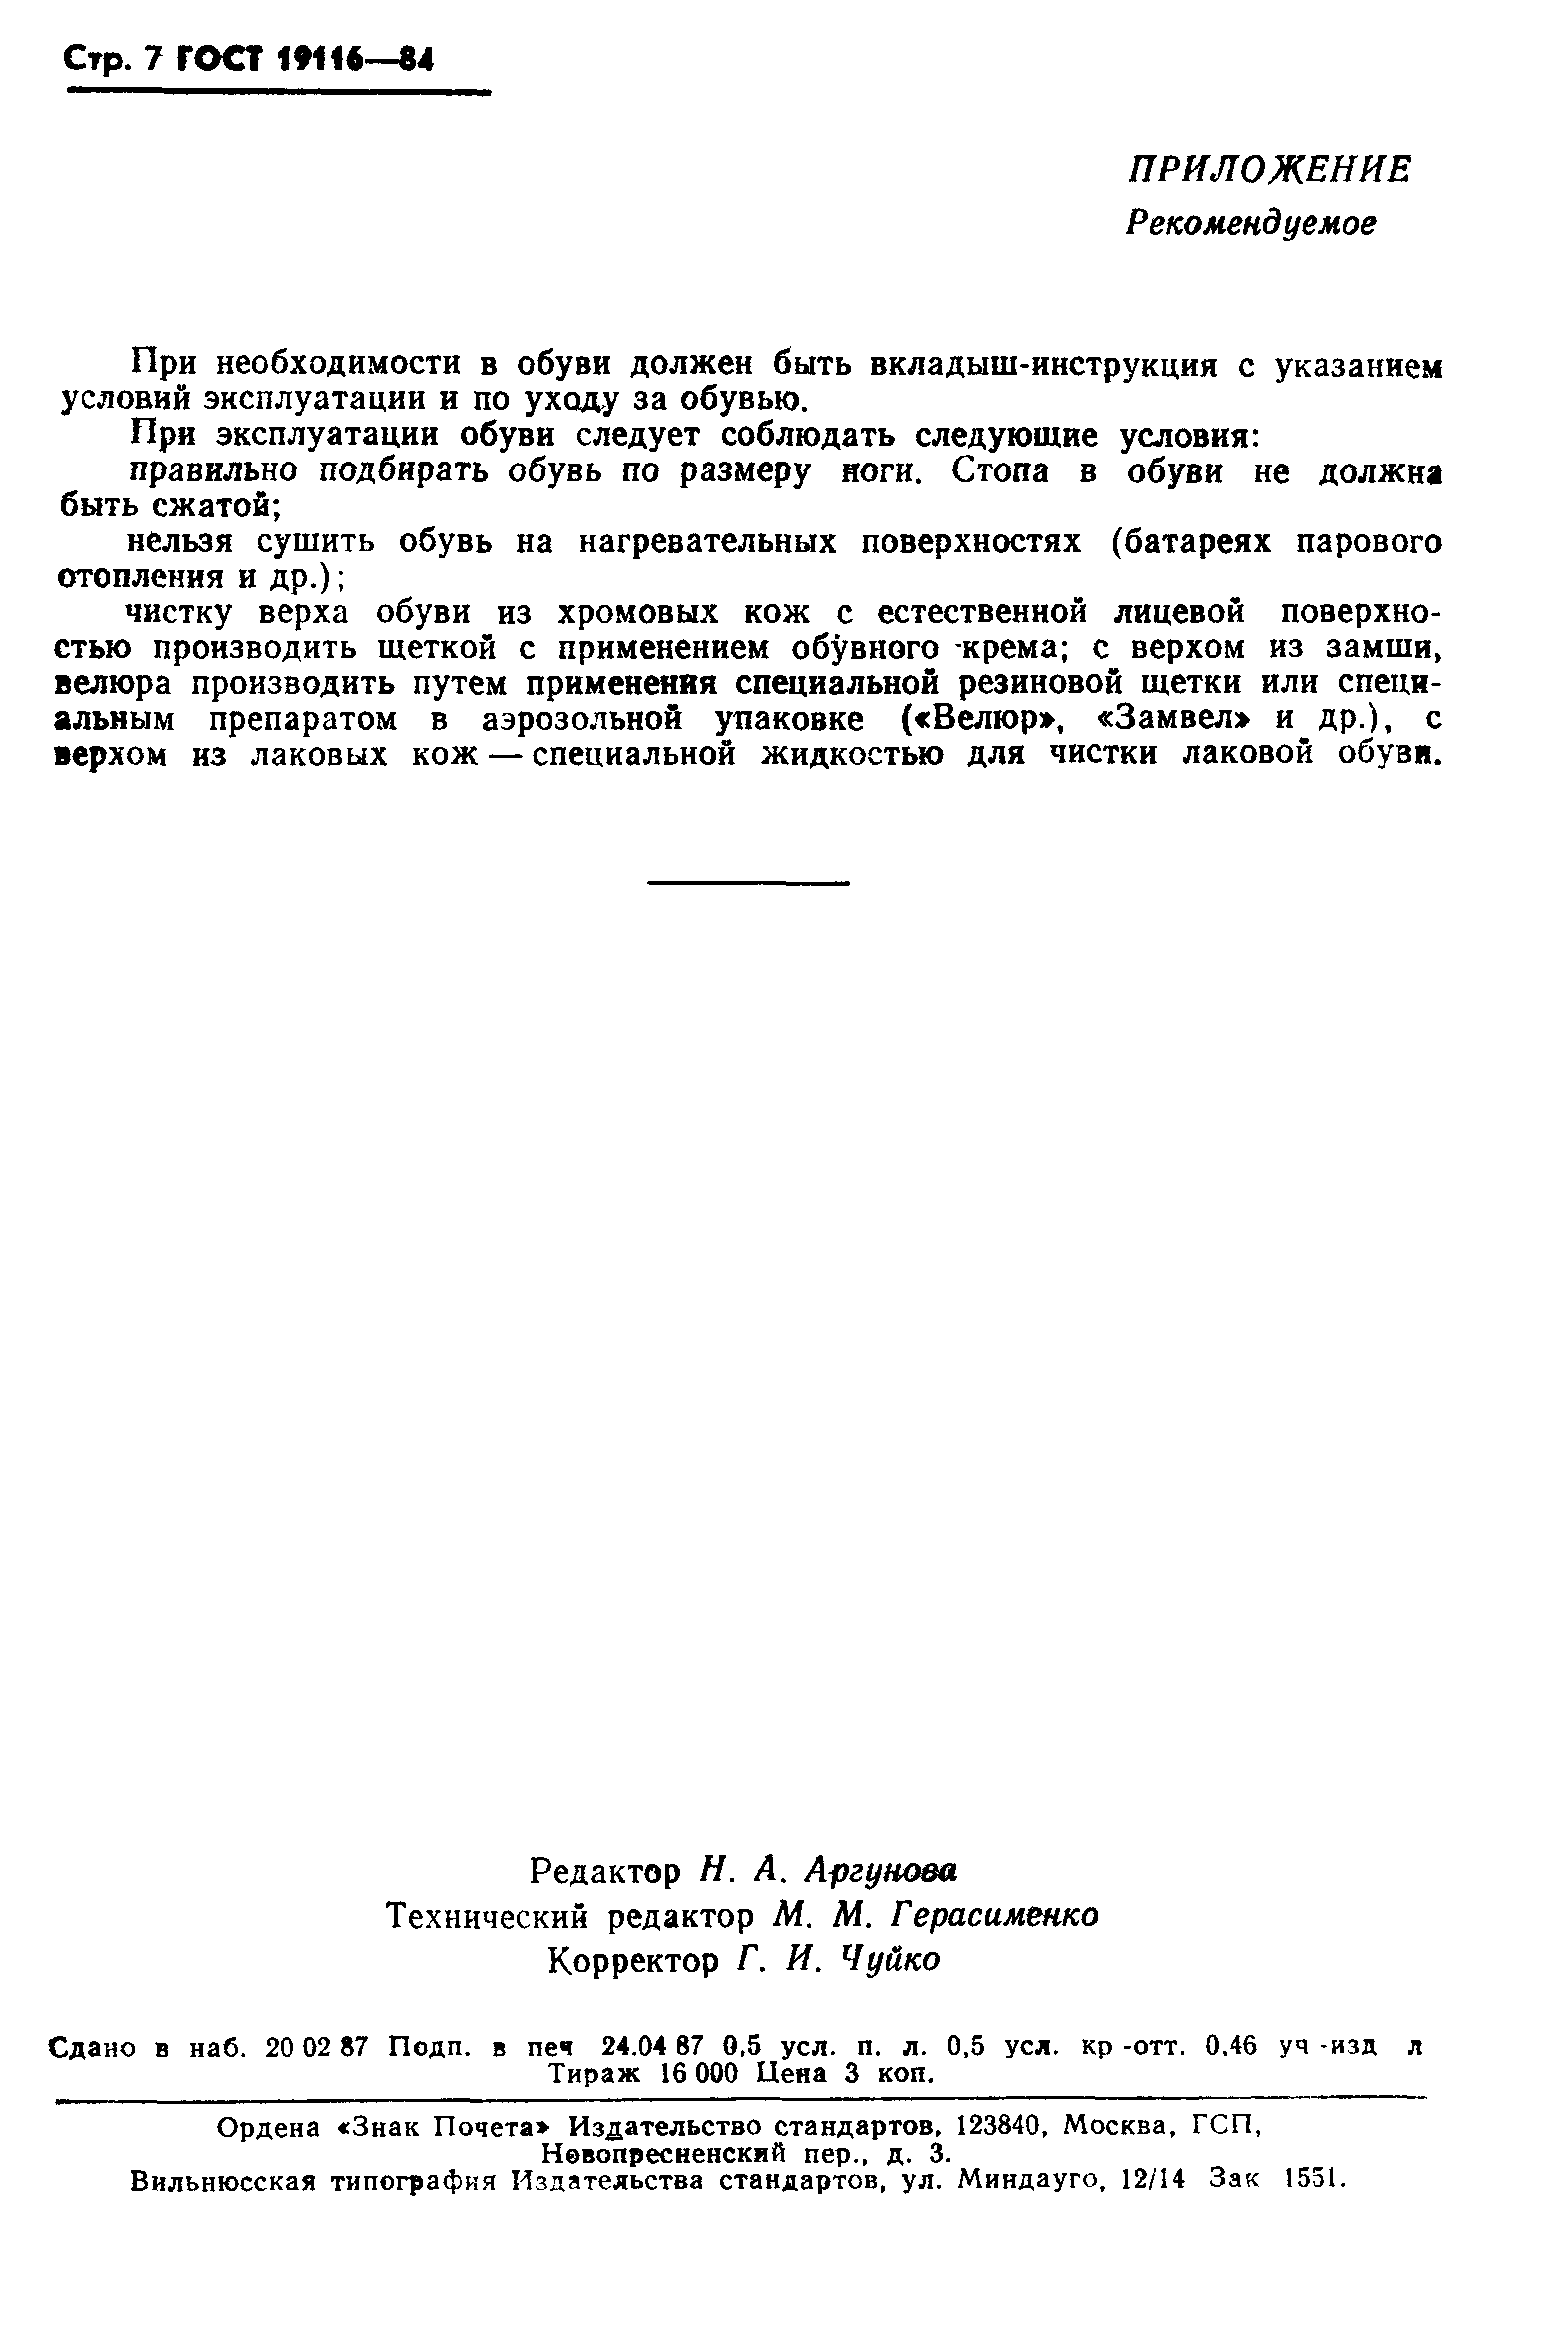 ГОСТ 19116-84